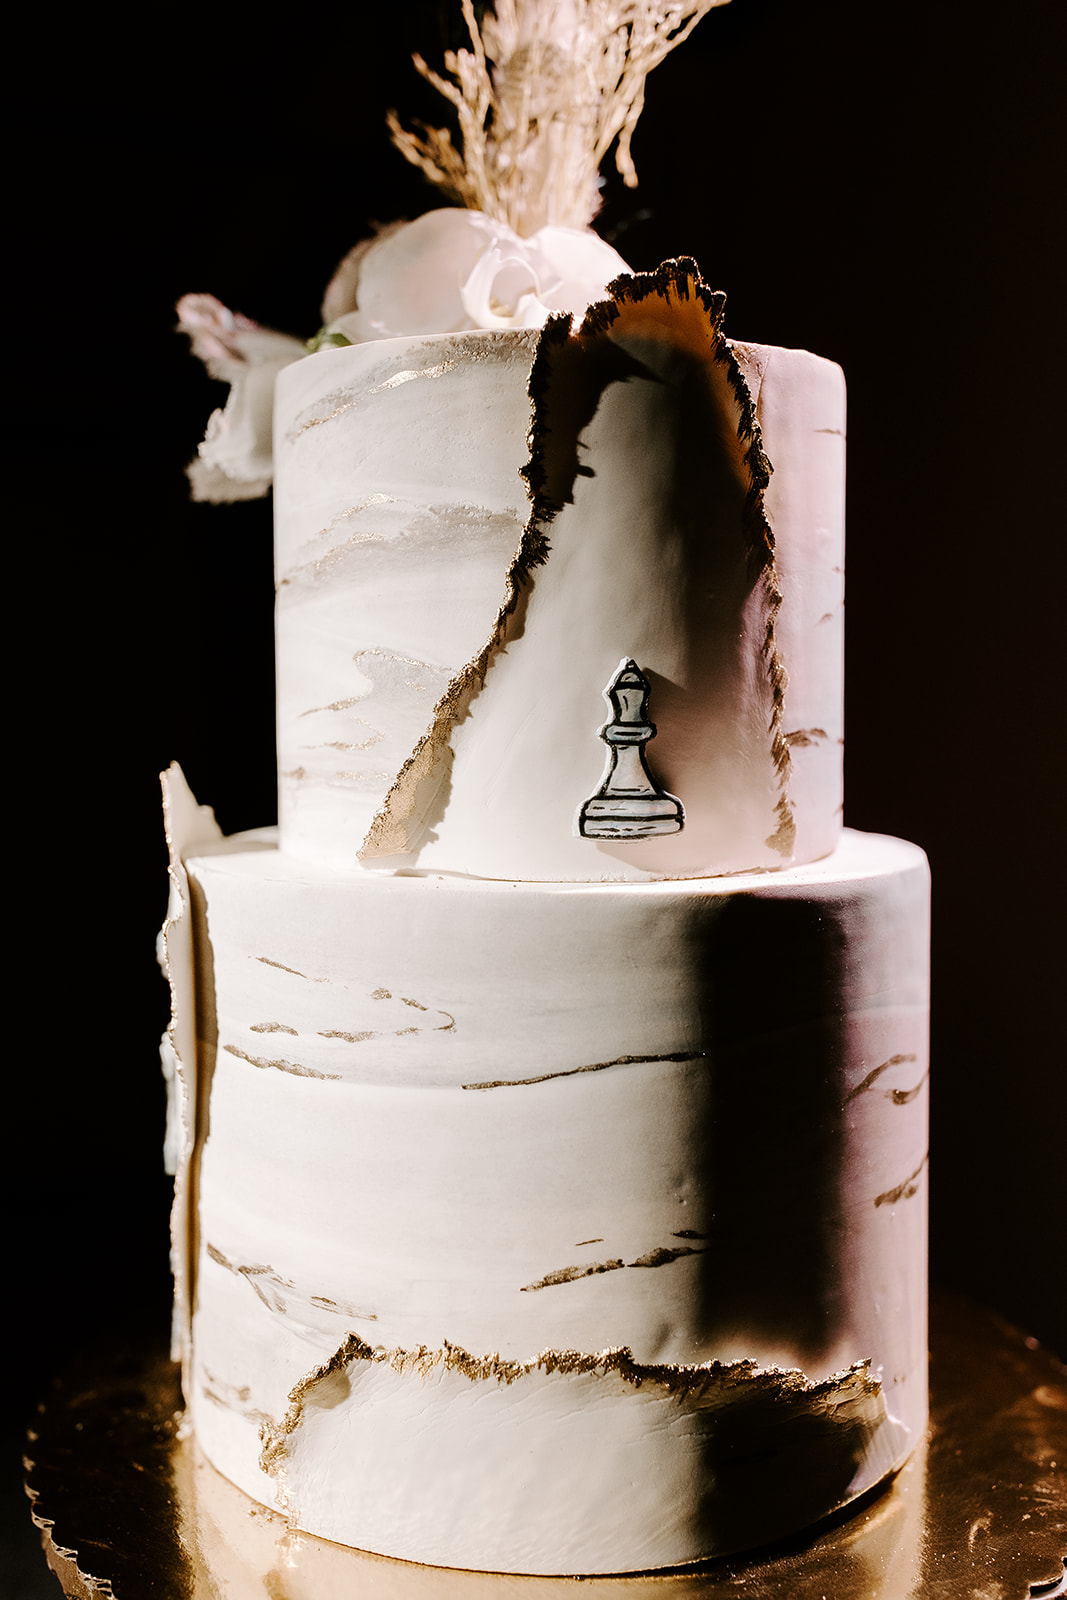 stunning detail shot of the beautiful wedding cake